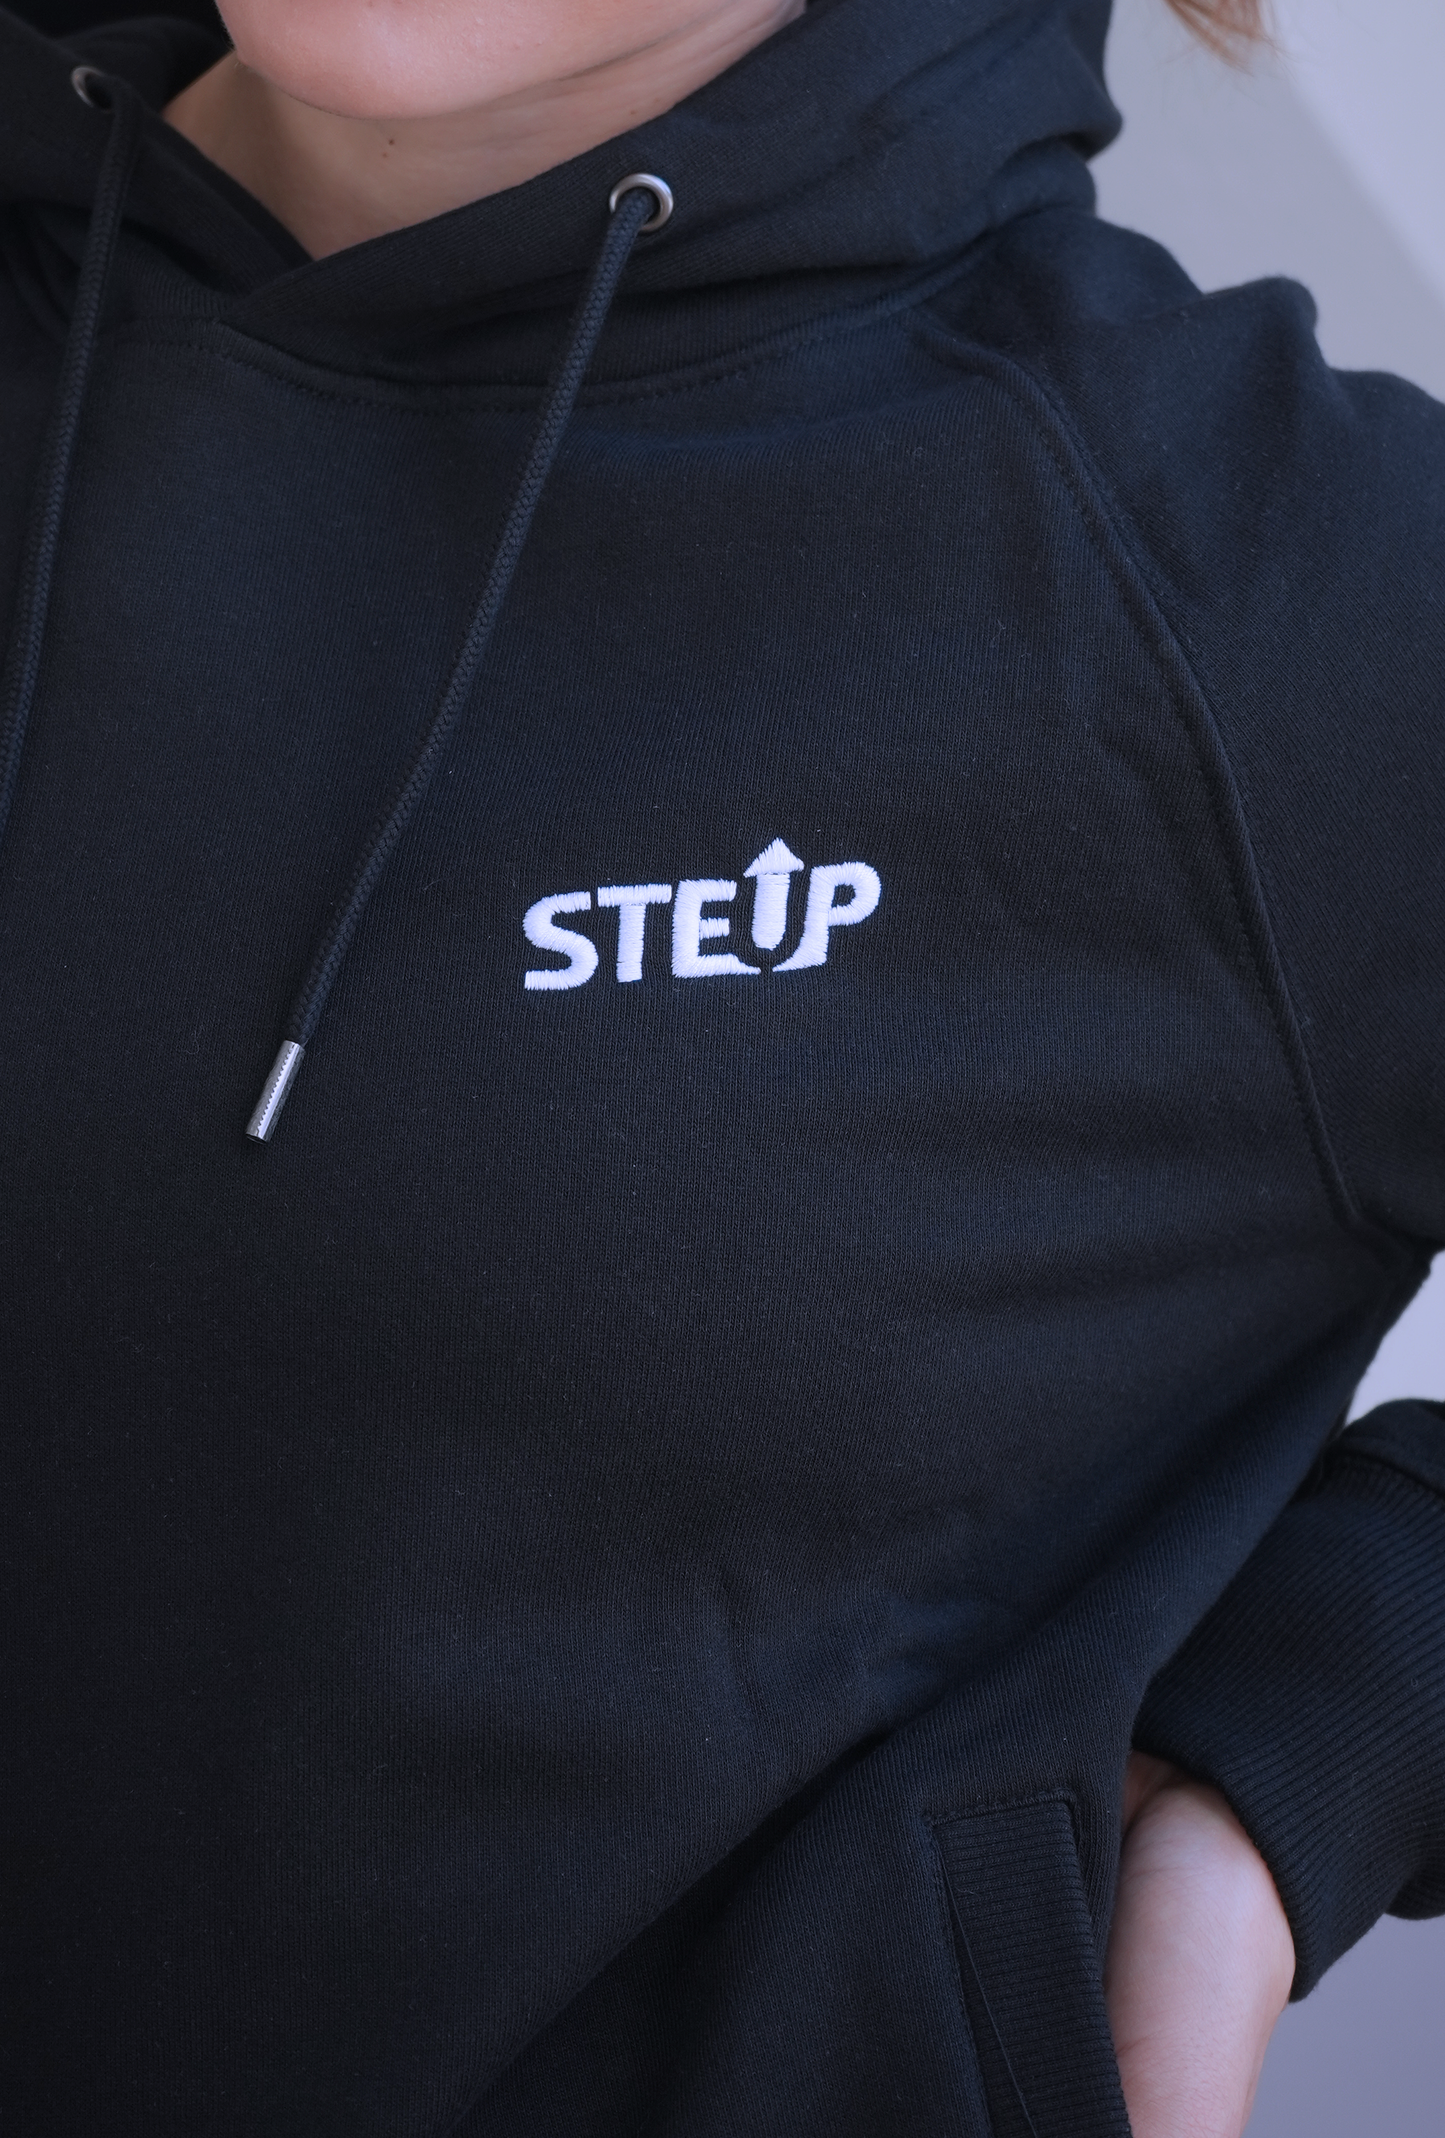 StepUp weißes Logo | Frauen Oversized Bio Baumwoll T-Shirt